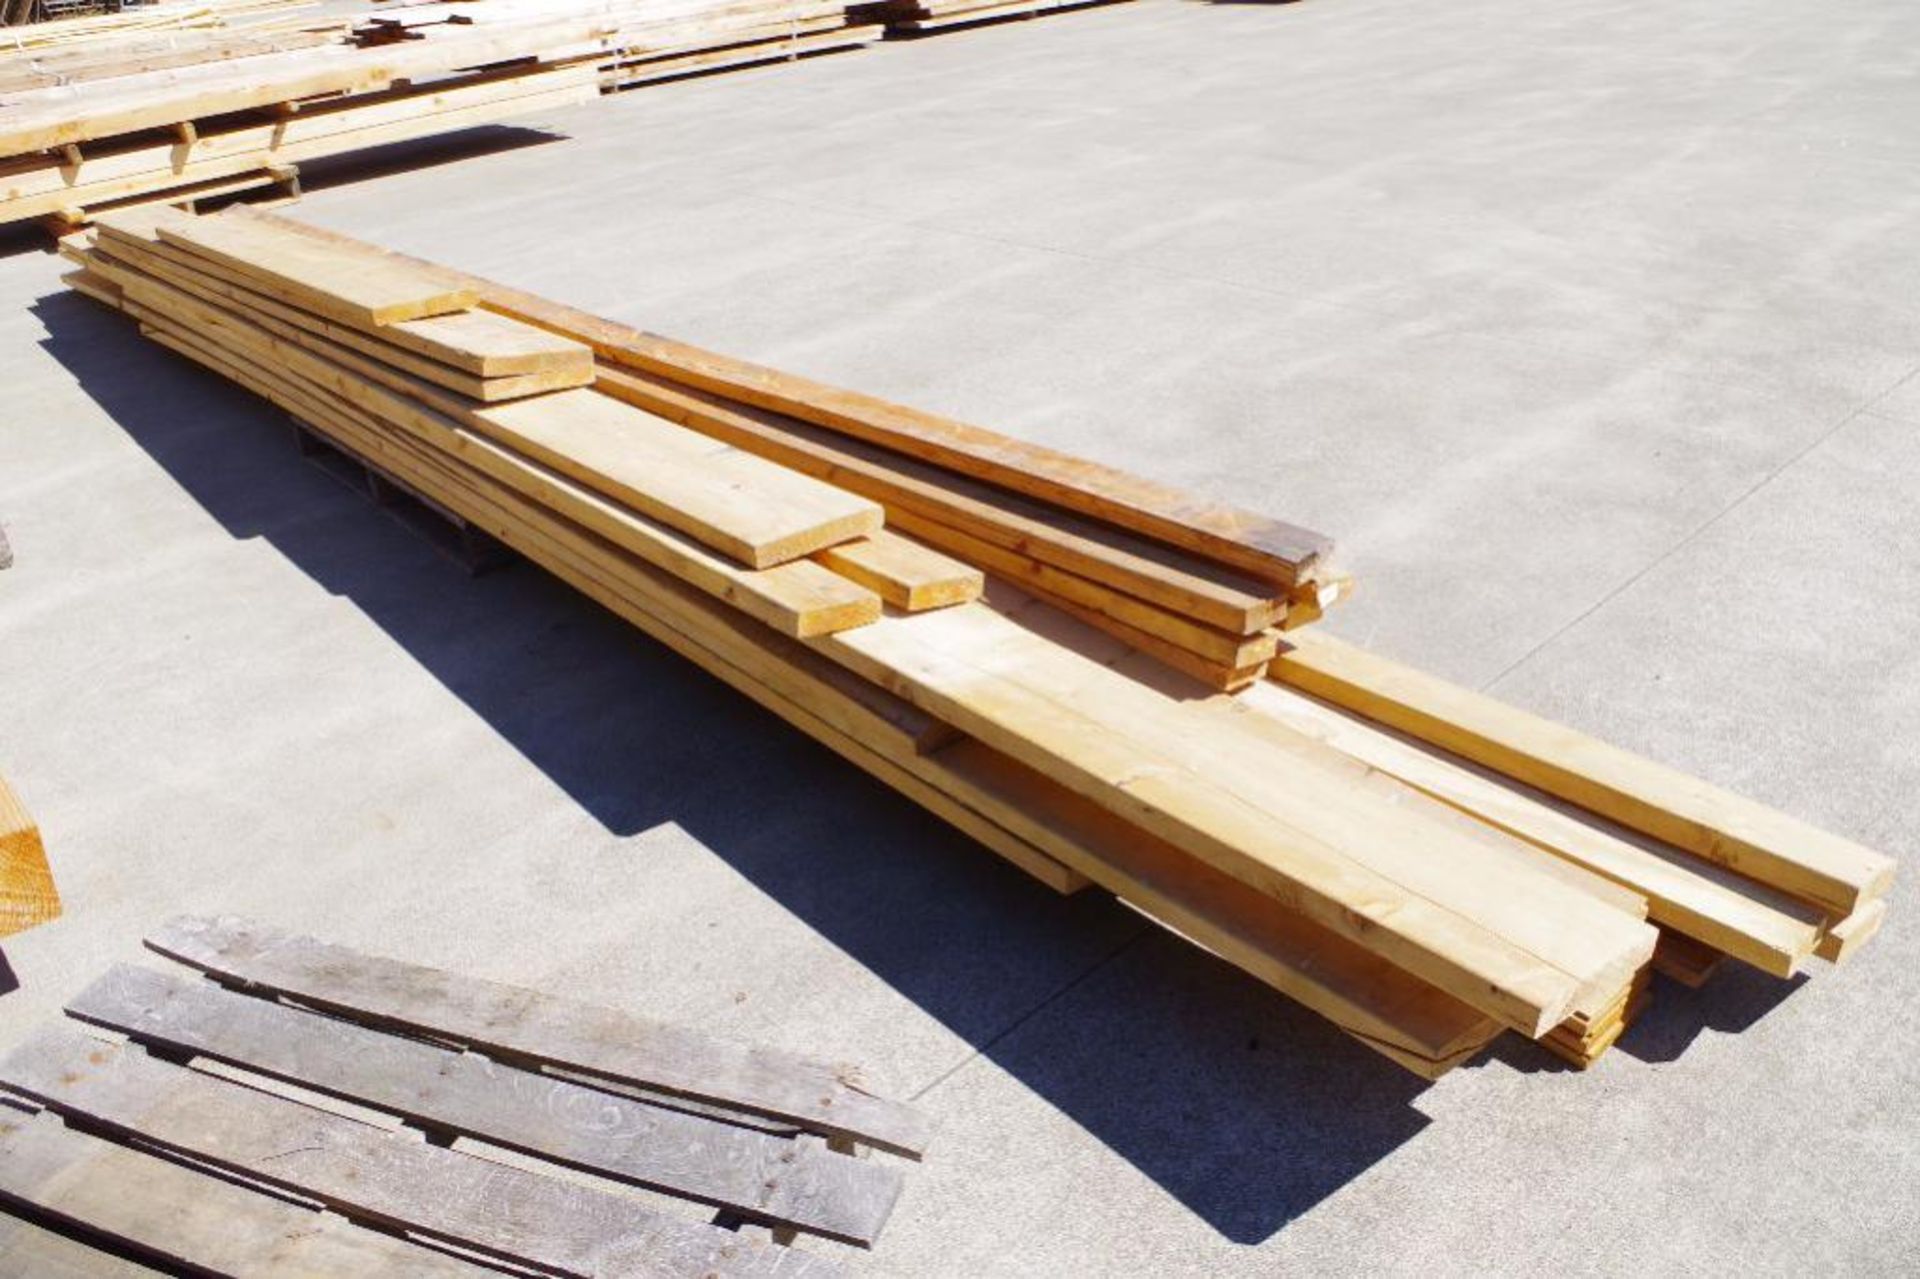 [QTY] Dimensional Lumber: 2x10s, 2x6s, 2x4s; Includes (12) 6" x 16' Cedar Bevel Siding Boards